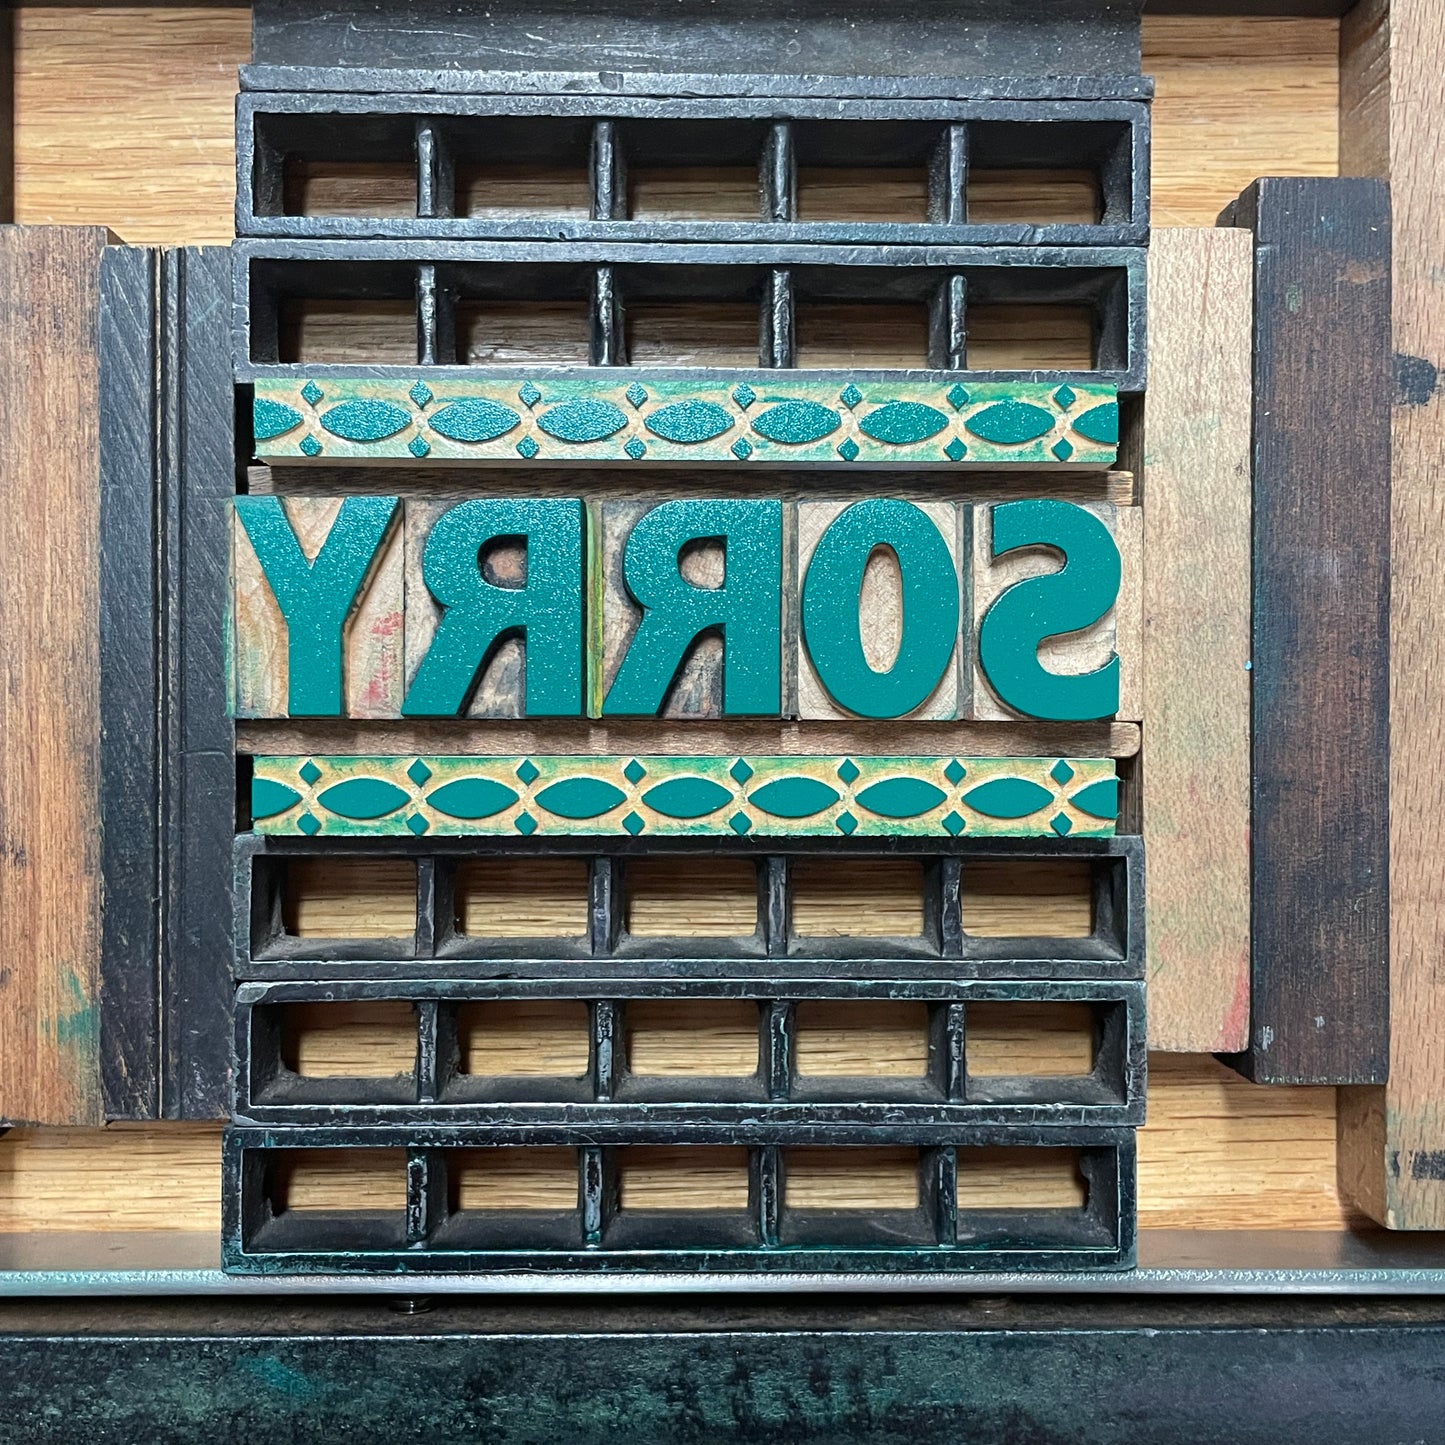 Sorry - single card - wood type letterpress printed